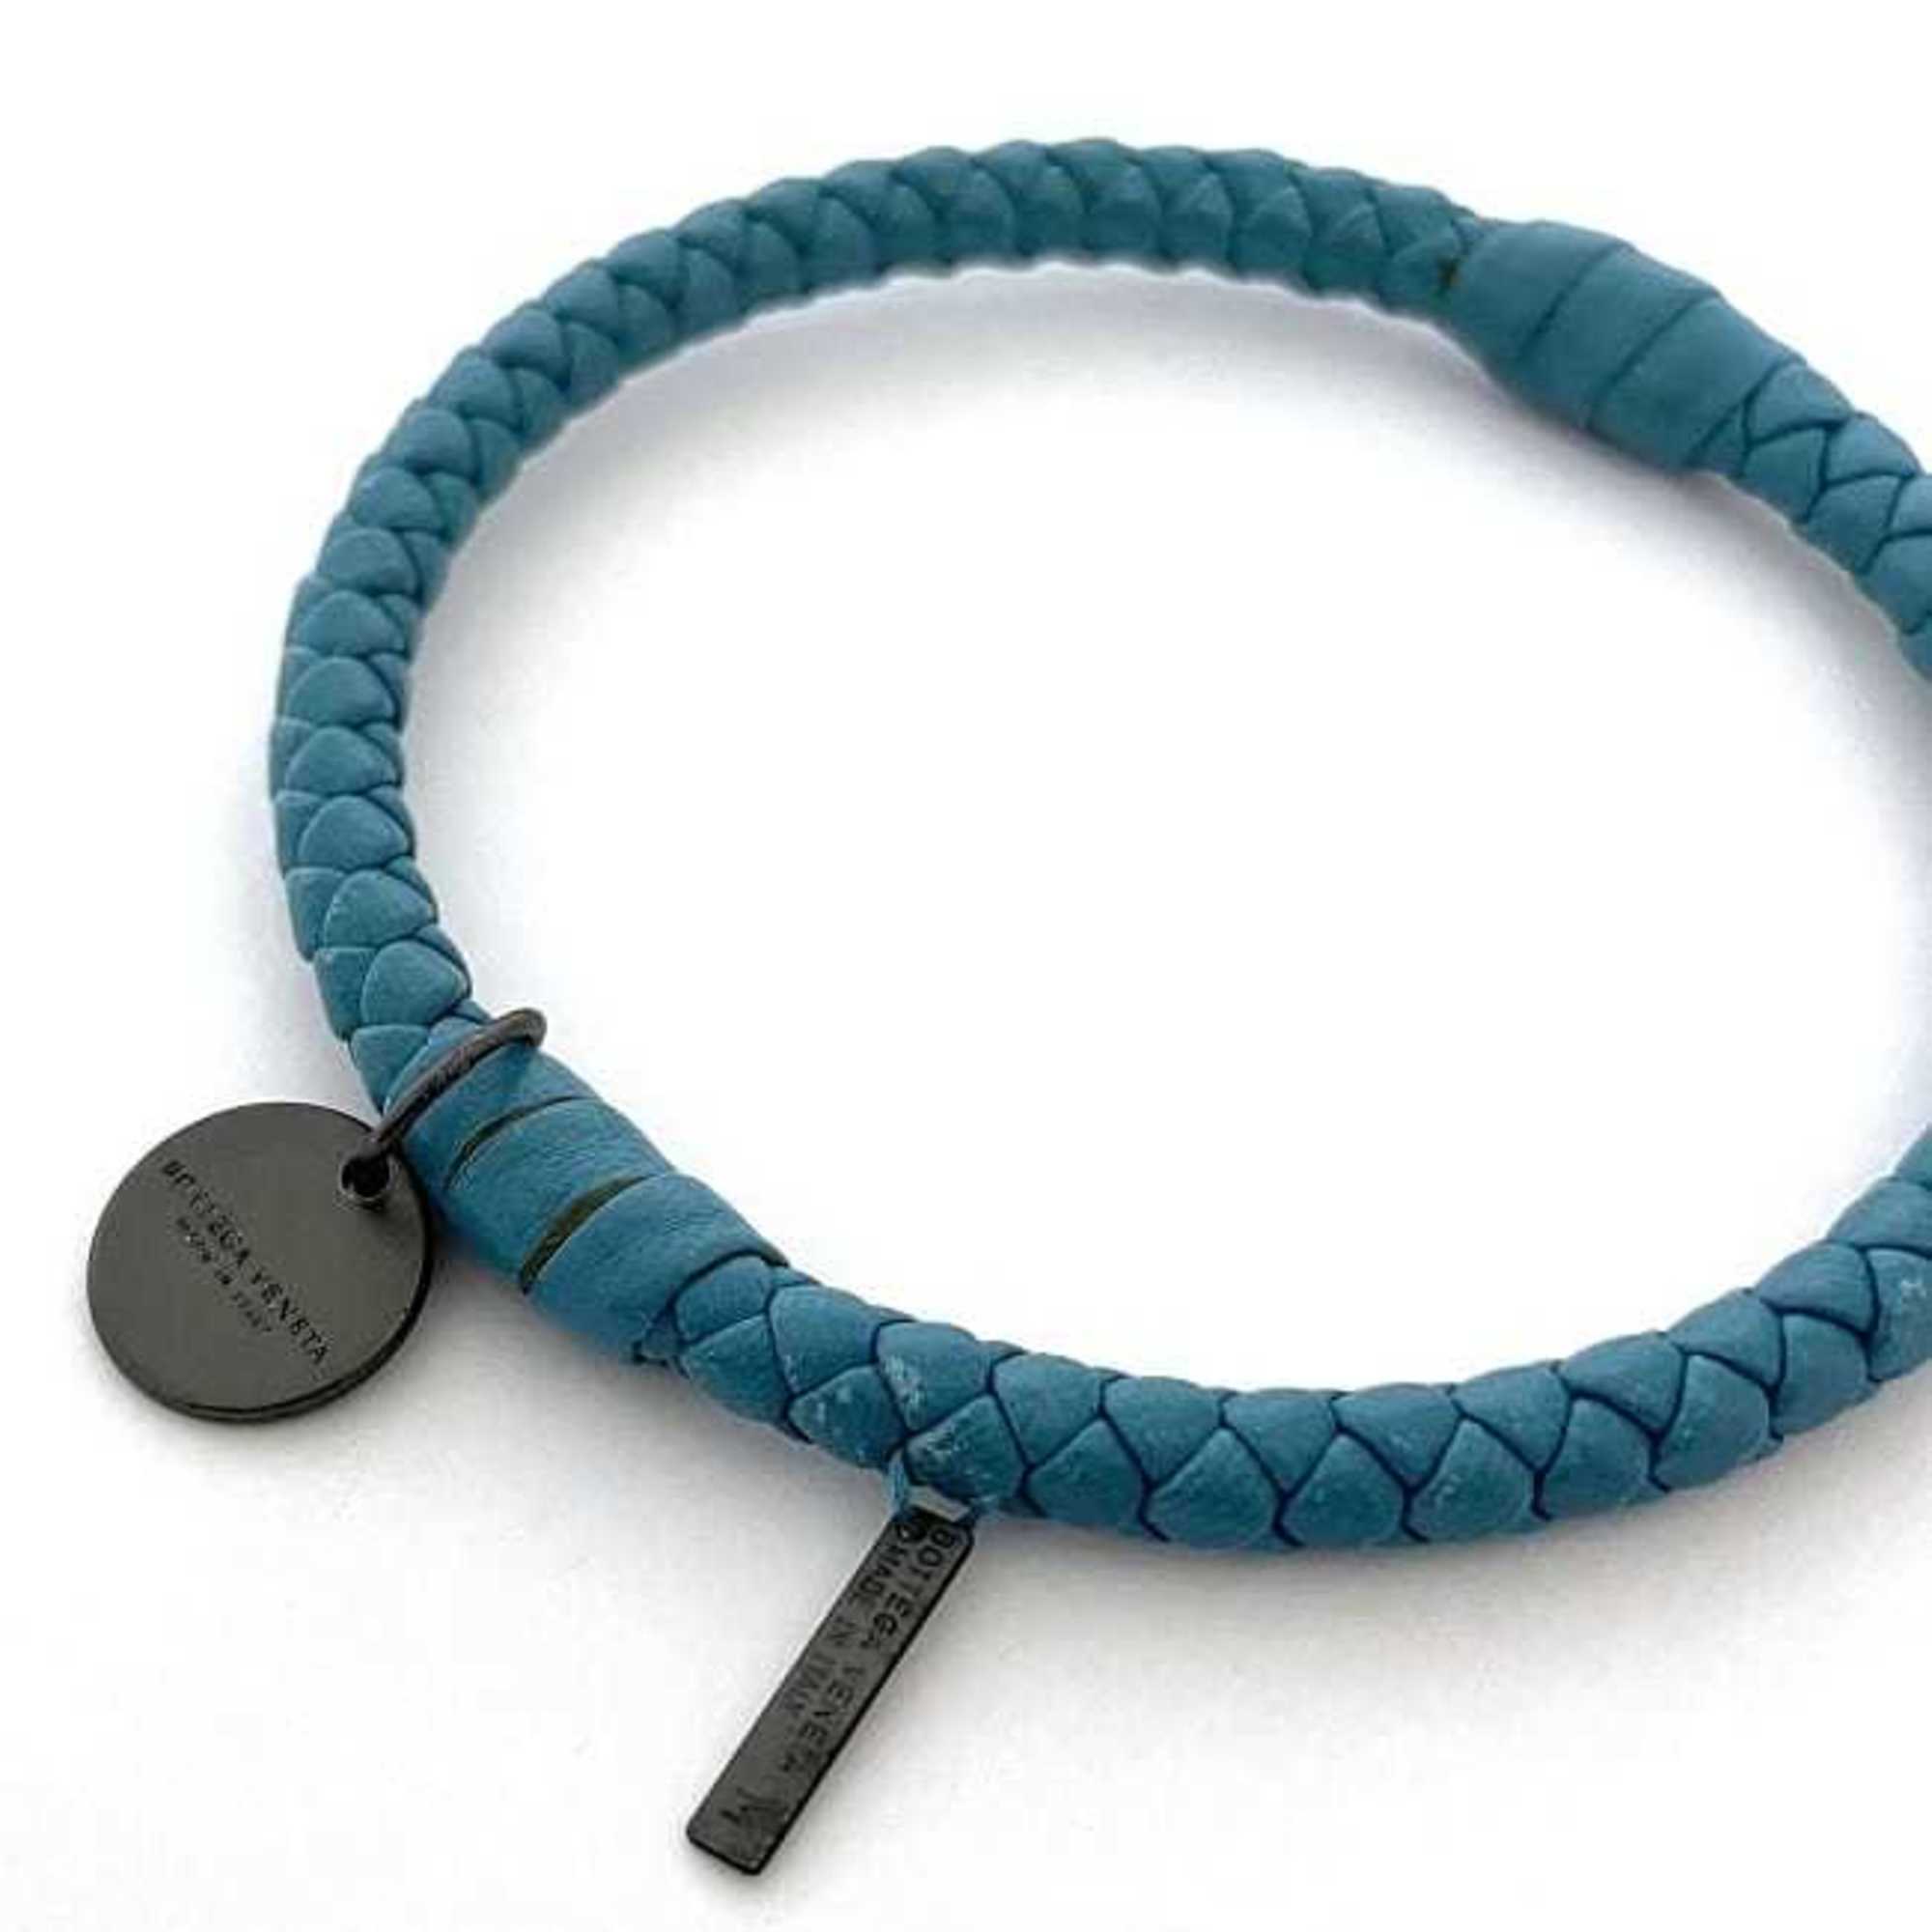 Bottega Veneta Bangle Light Blue Intrecciato ec-19881 Leather BOTTEGA VENETA Bracelet Women Men